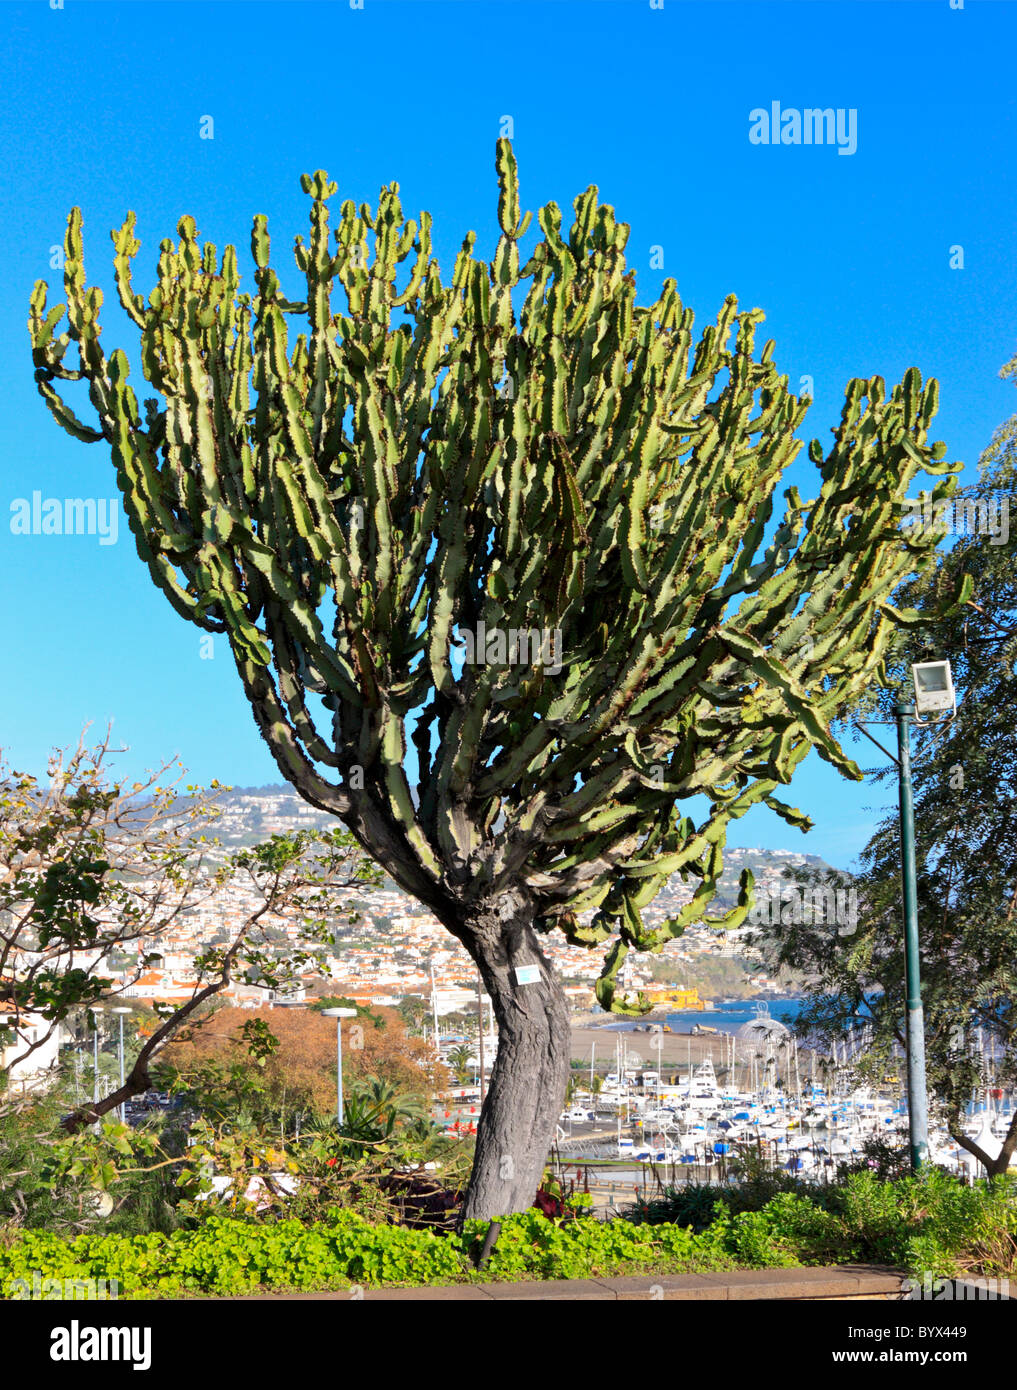 Large Euphorbia Tree in Parque de Santa Catarina, Funchal, Madeira Stock Photo